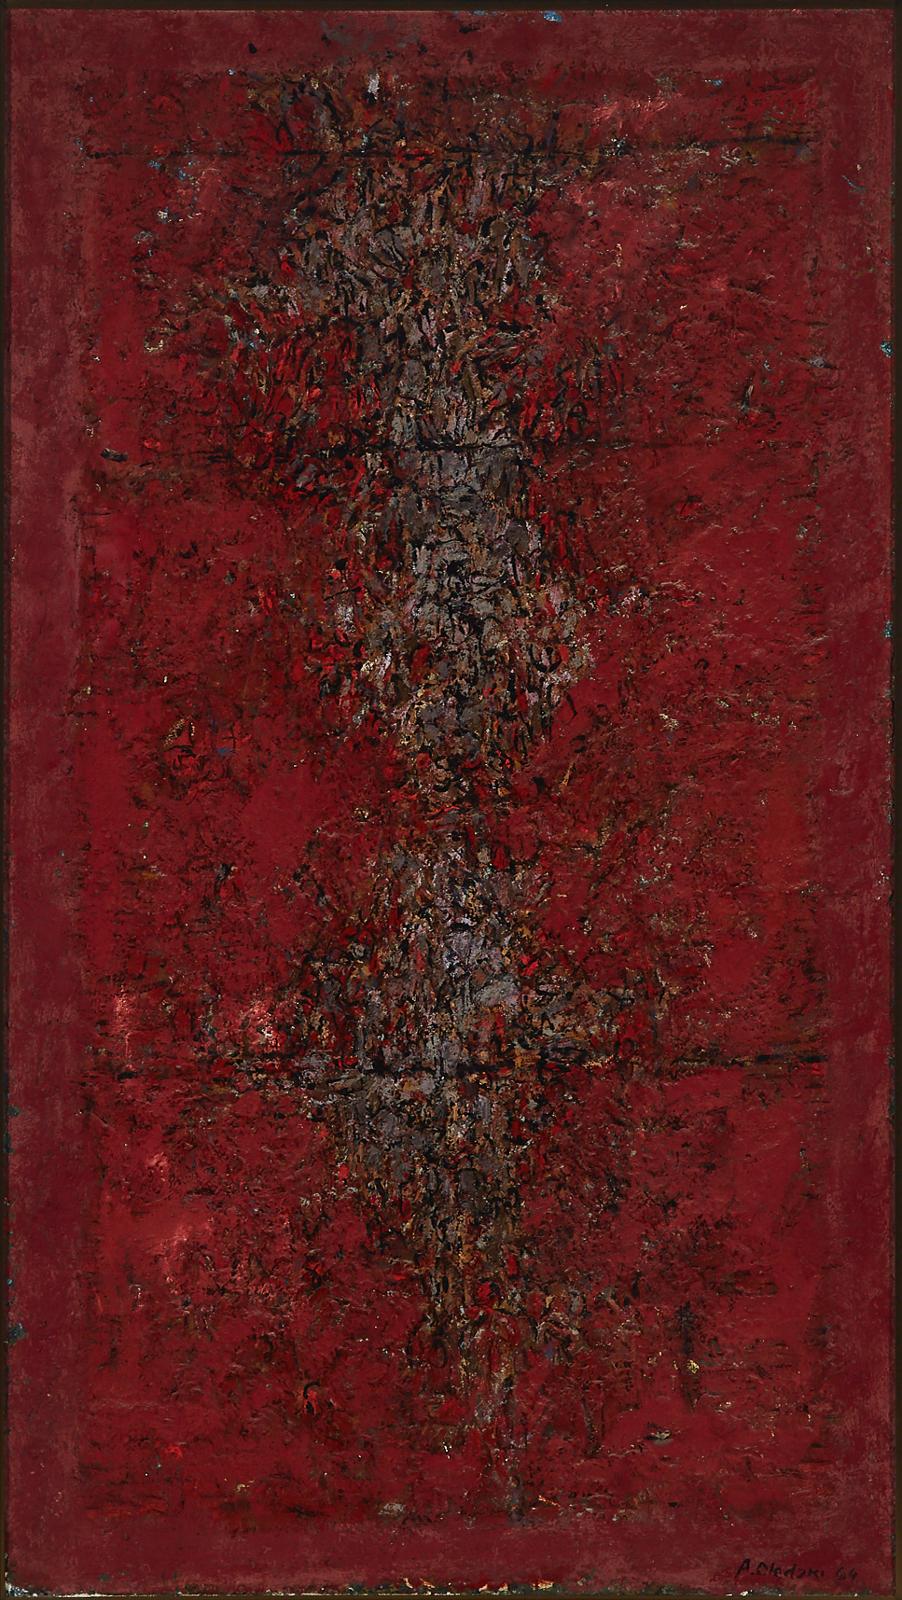 Antoni Oledzki (1932) - Untitled (Red Composite Abstract), 1964